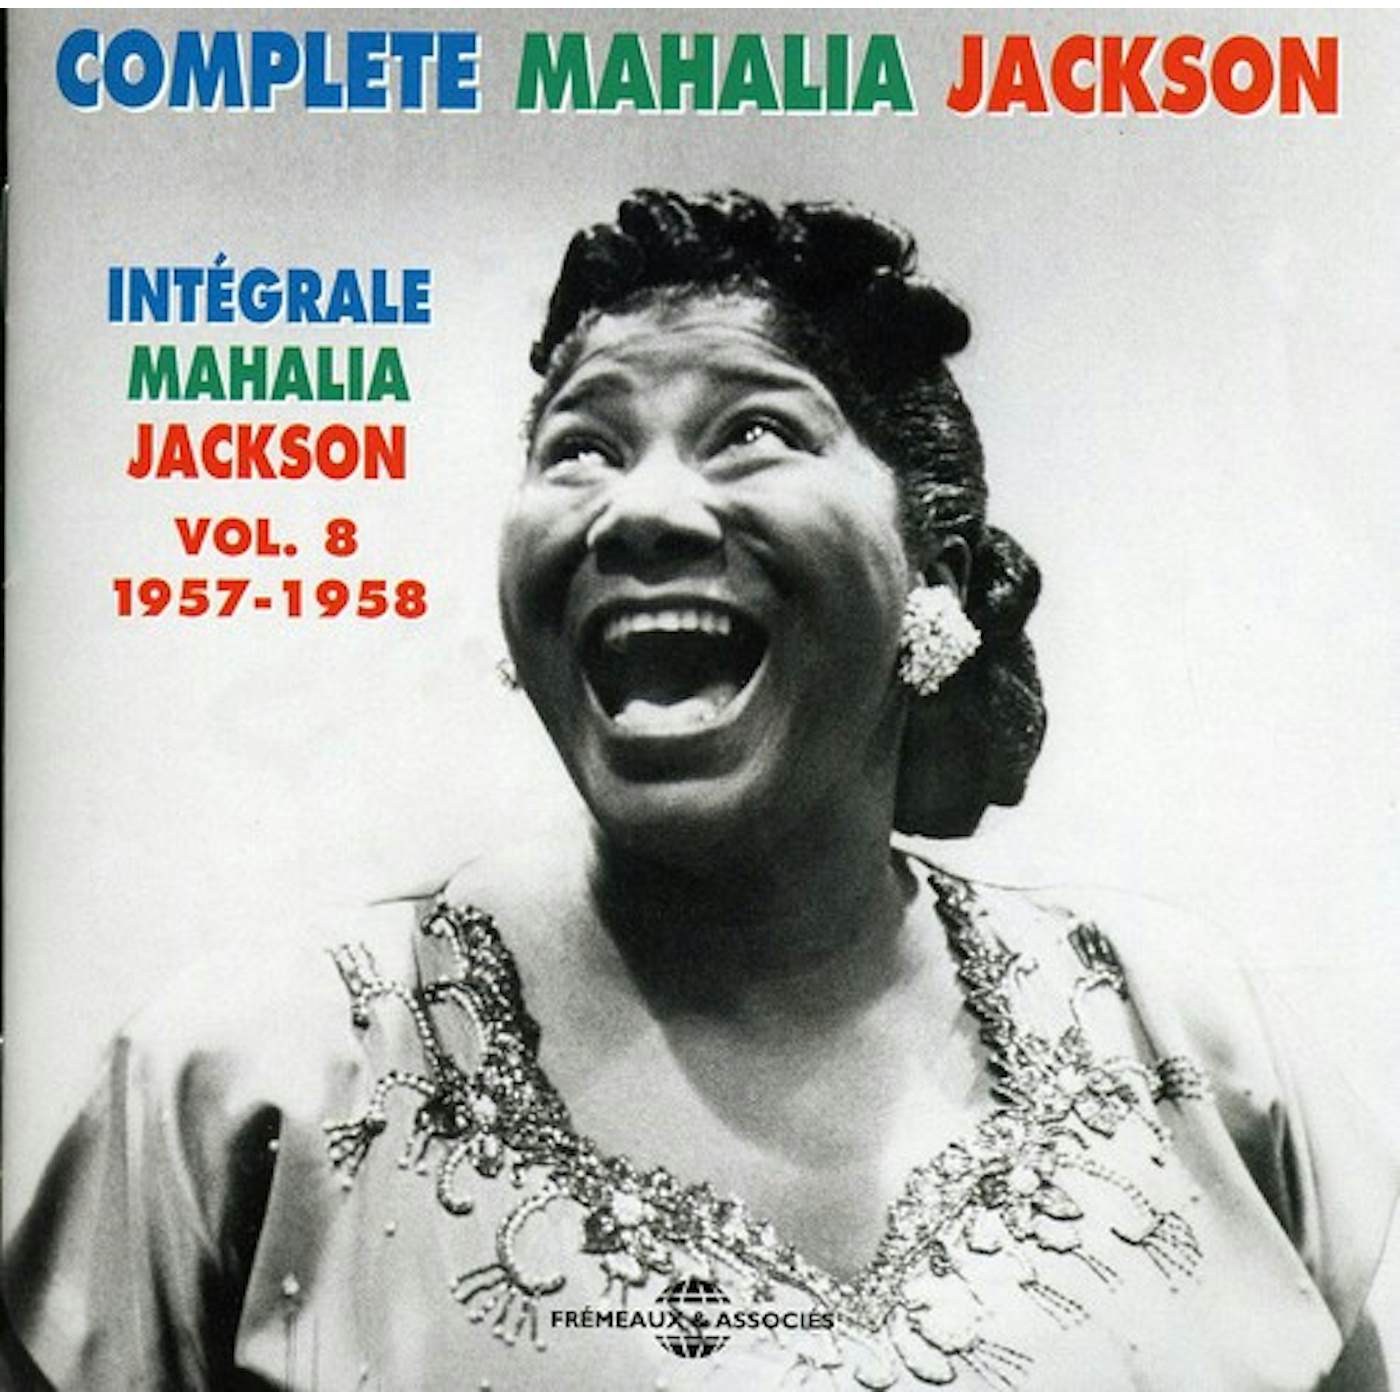 Mahalia Jackson VOL. 8-INTEGRALE CD